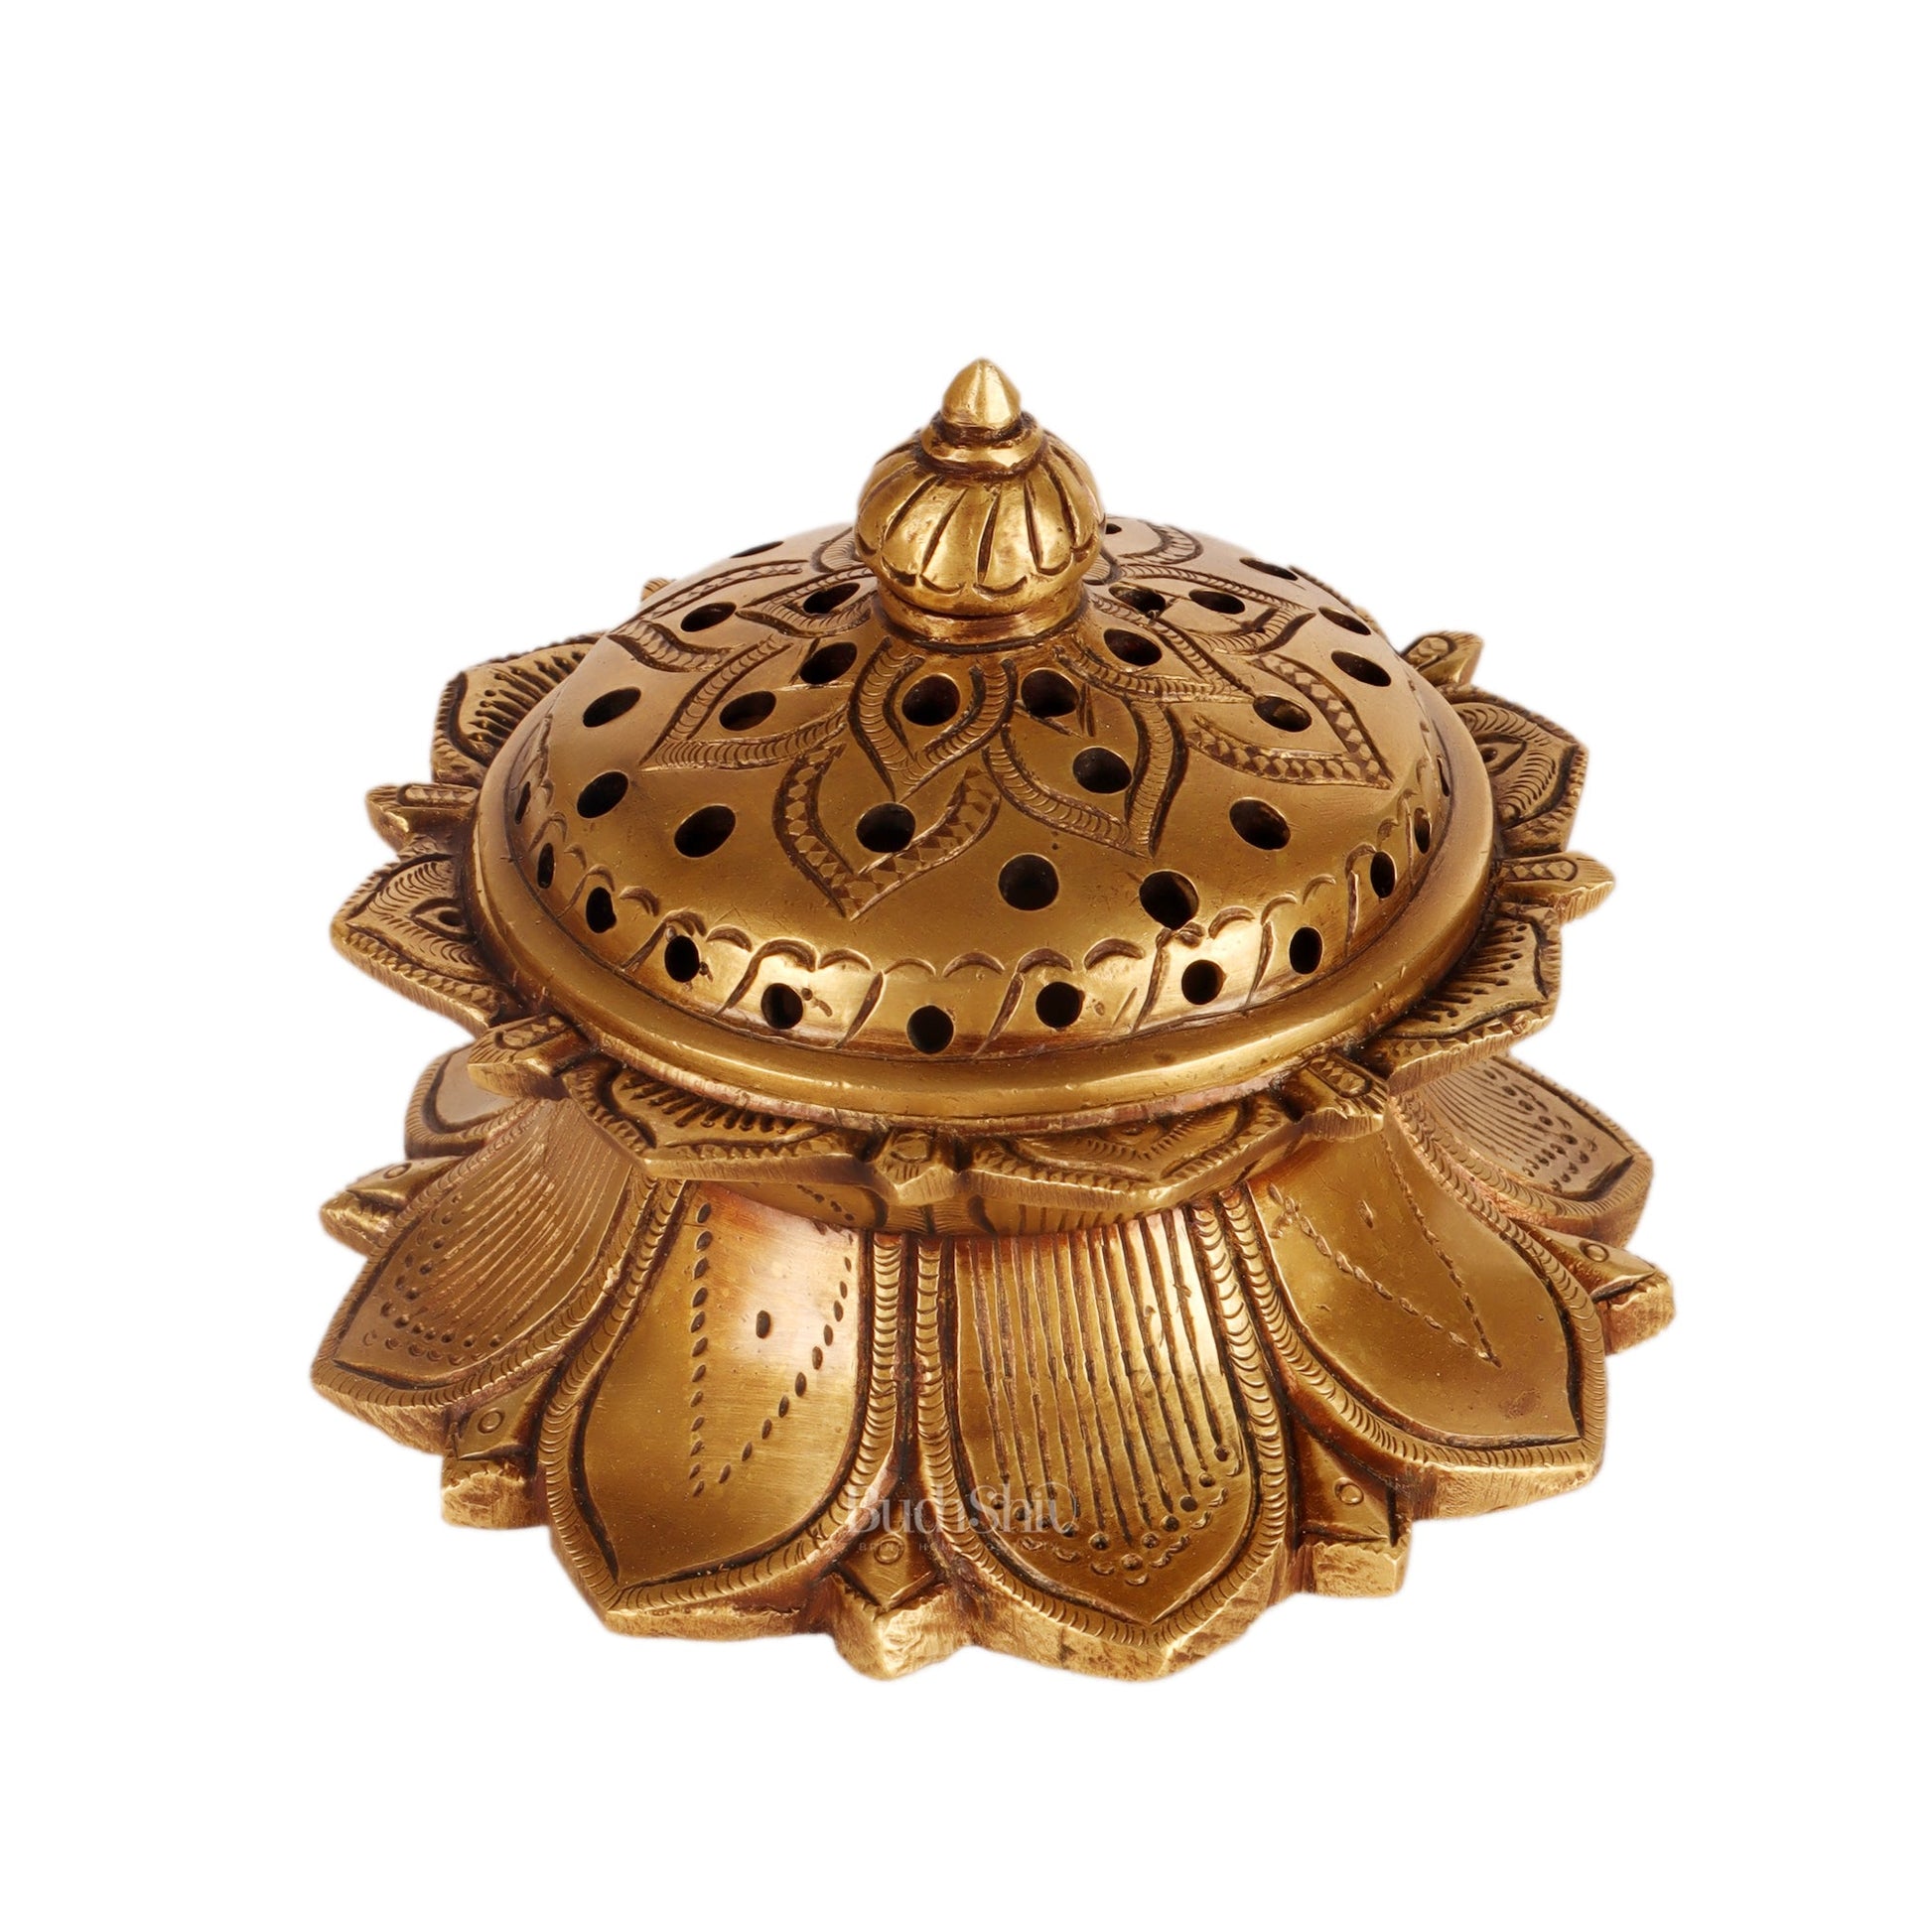 Brass Lotus Dhoop daani/ loban burner 4" antique tone - Budhshiv.com